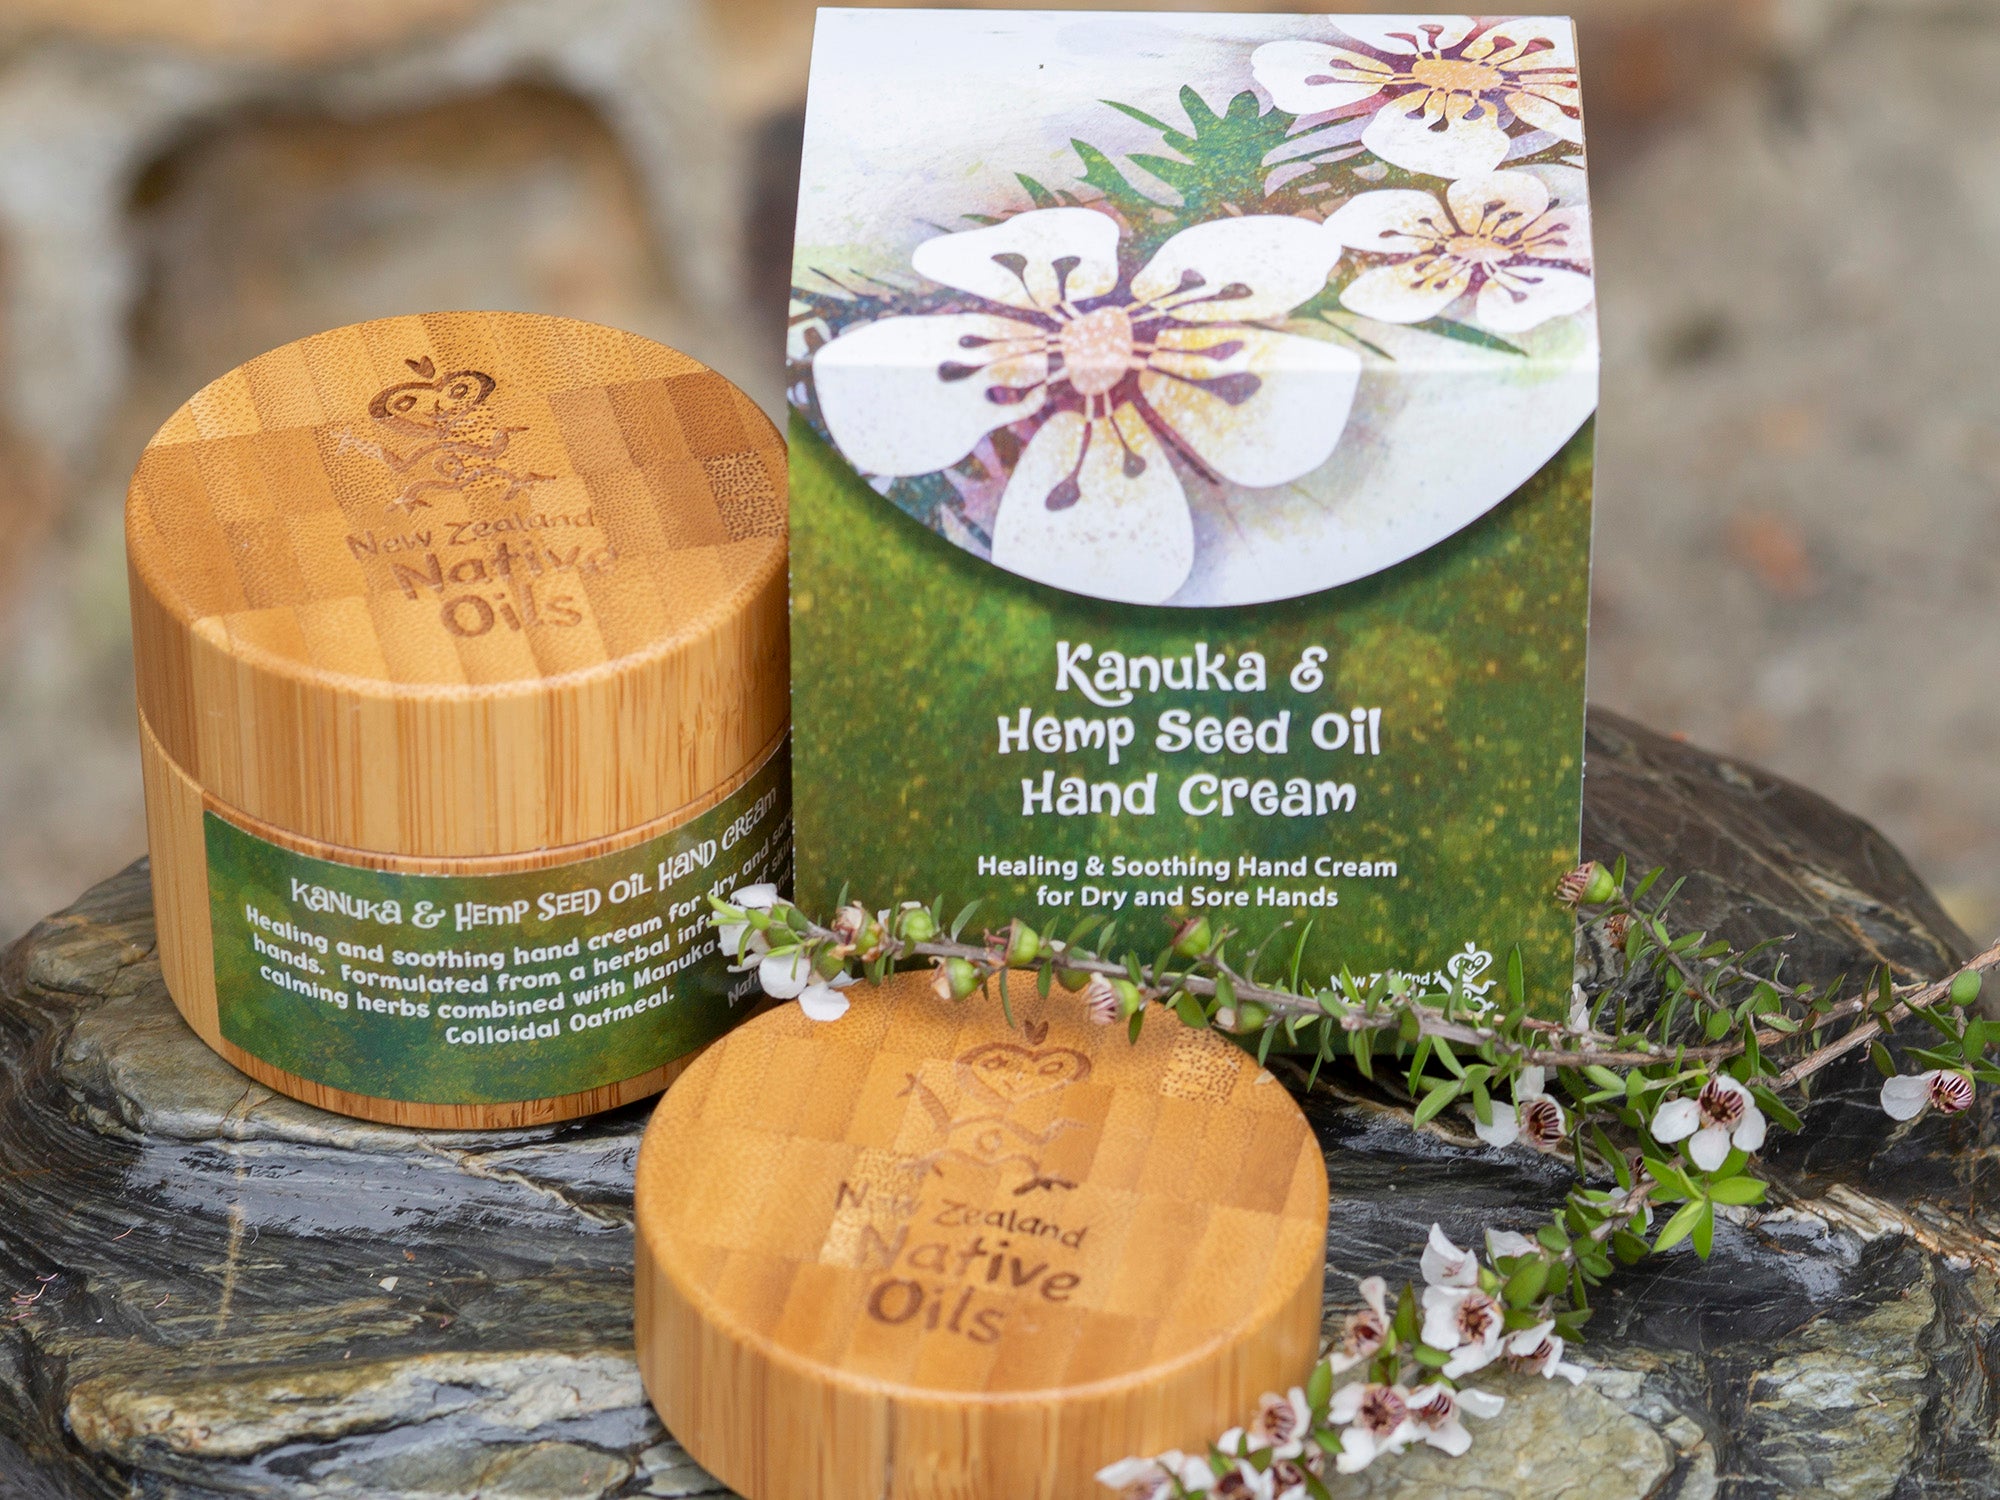 Kanuka and Hemp Seed Oil Hand Cream-NZ Native Oils Ltd